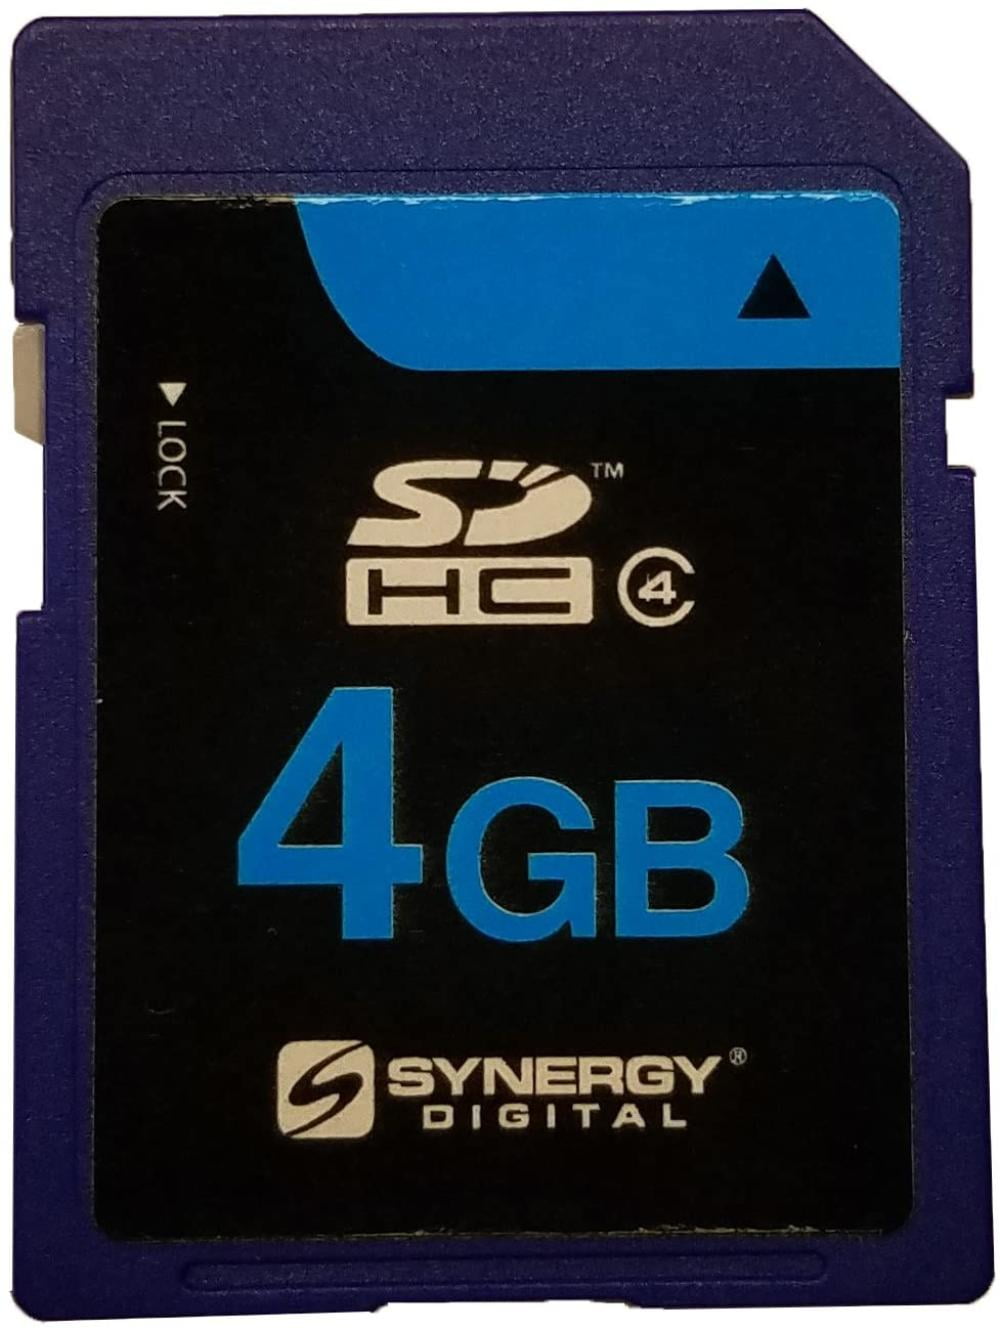 16GB Memory SD Card For Pentax K100D Digital Camera